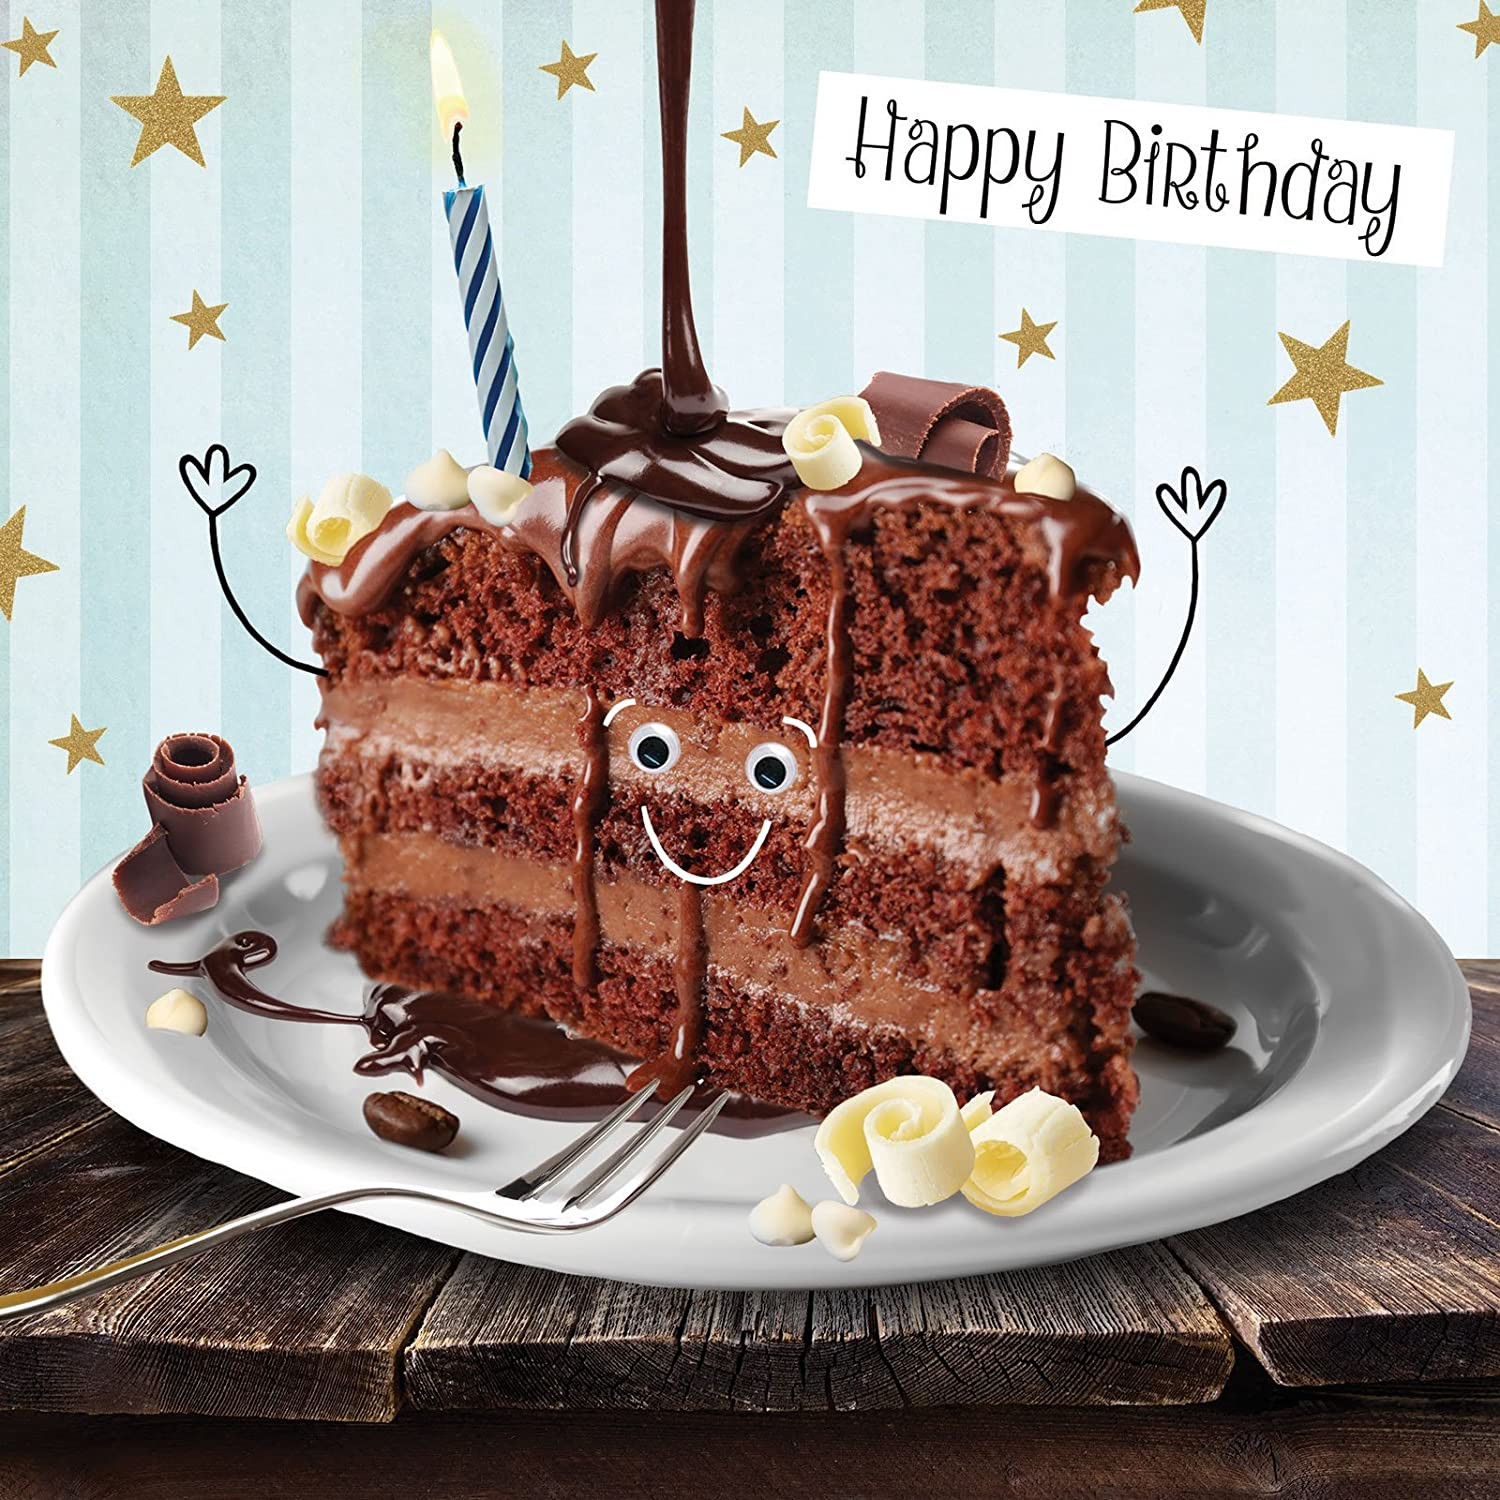 Happy Birthday Cake Funny
 Funny Chocolate Cake Birthday Card 3D Goggly Moving Eyes